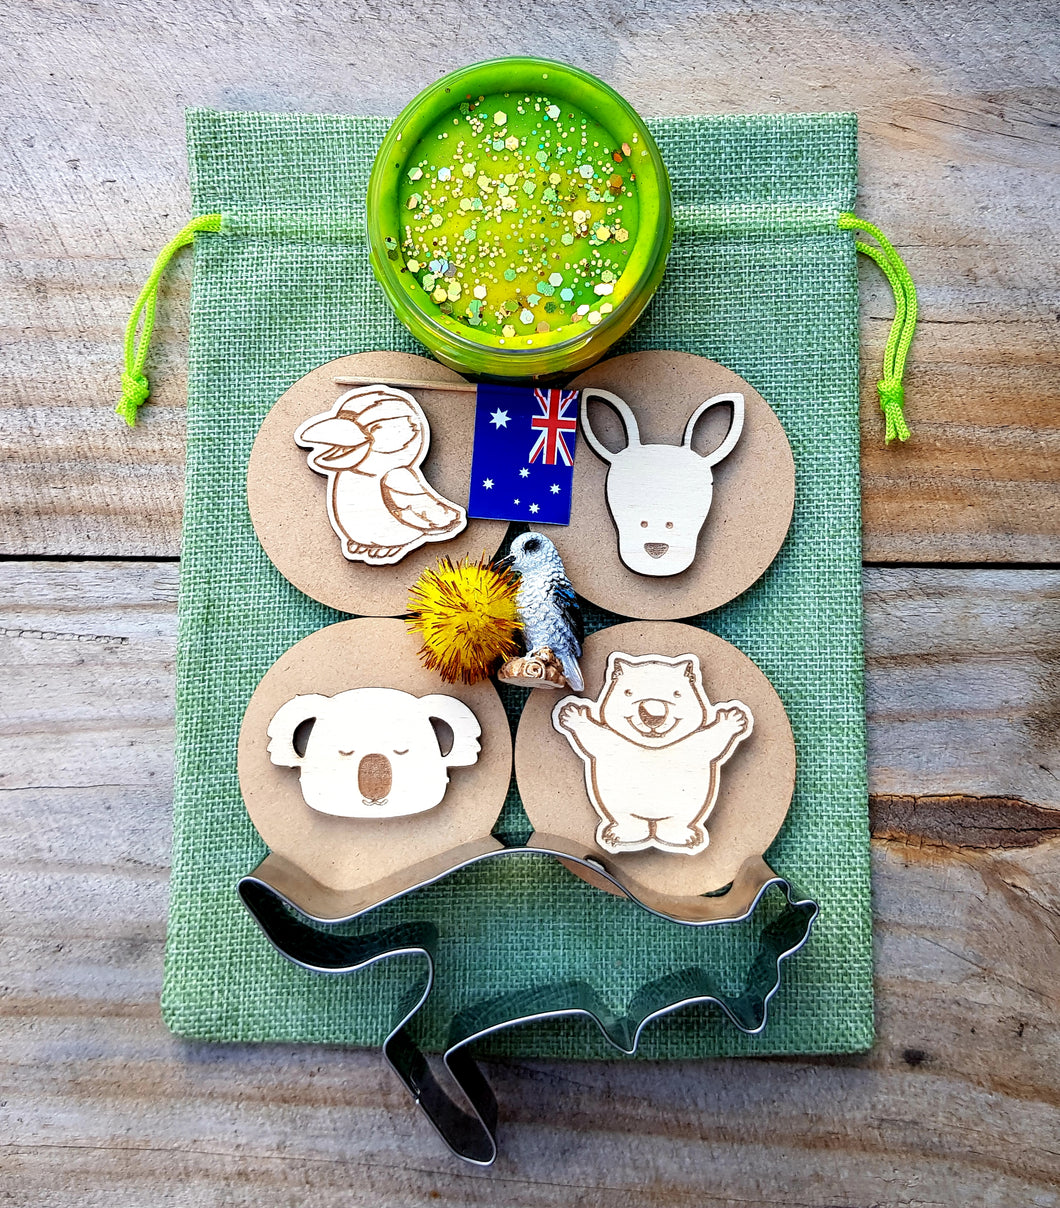 Australian Animal Playdough kit- Starter Kit. https://willowandbelle.com.au/collections/playdough-sensory-play/products/mini-playdough-kits-australian-animals